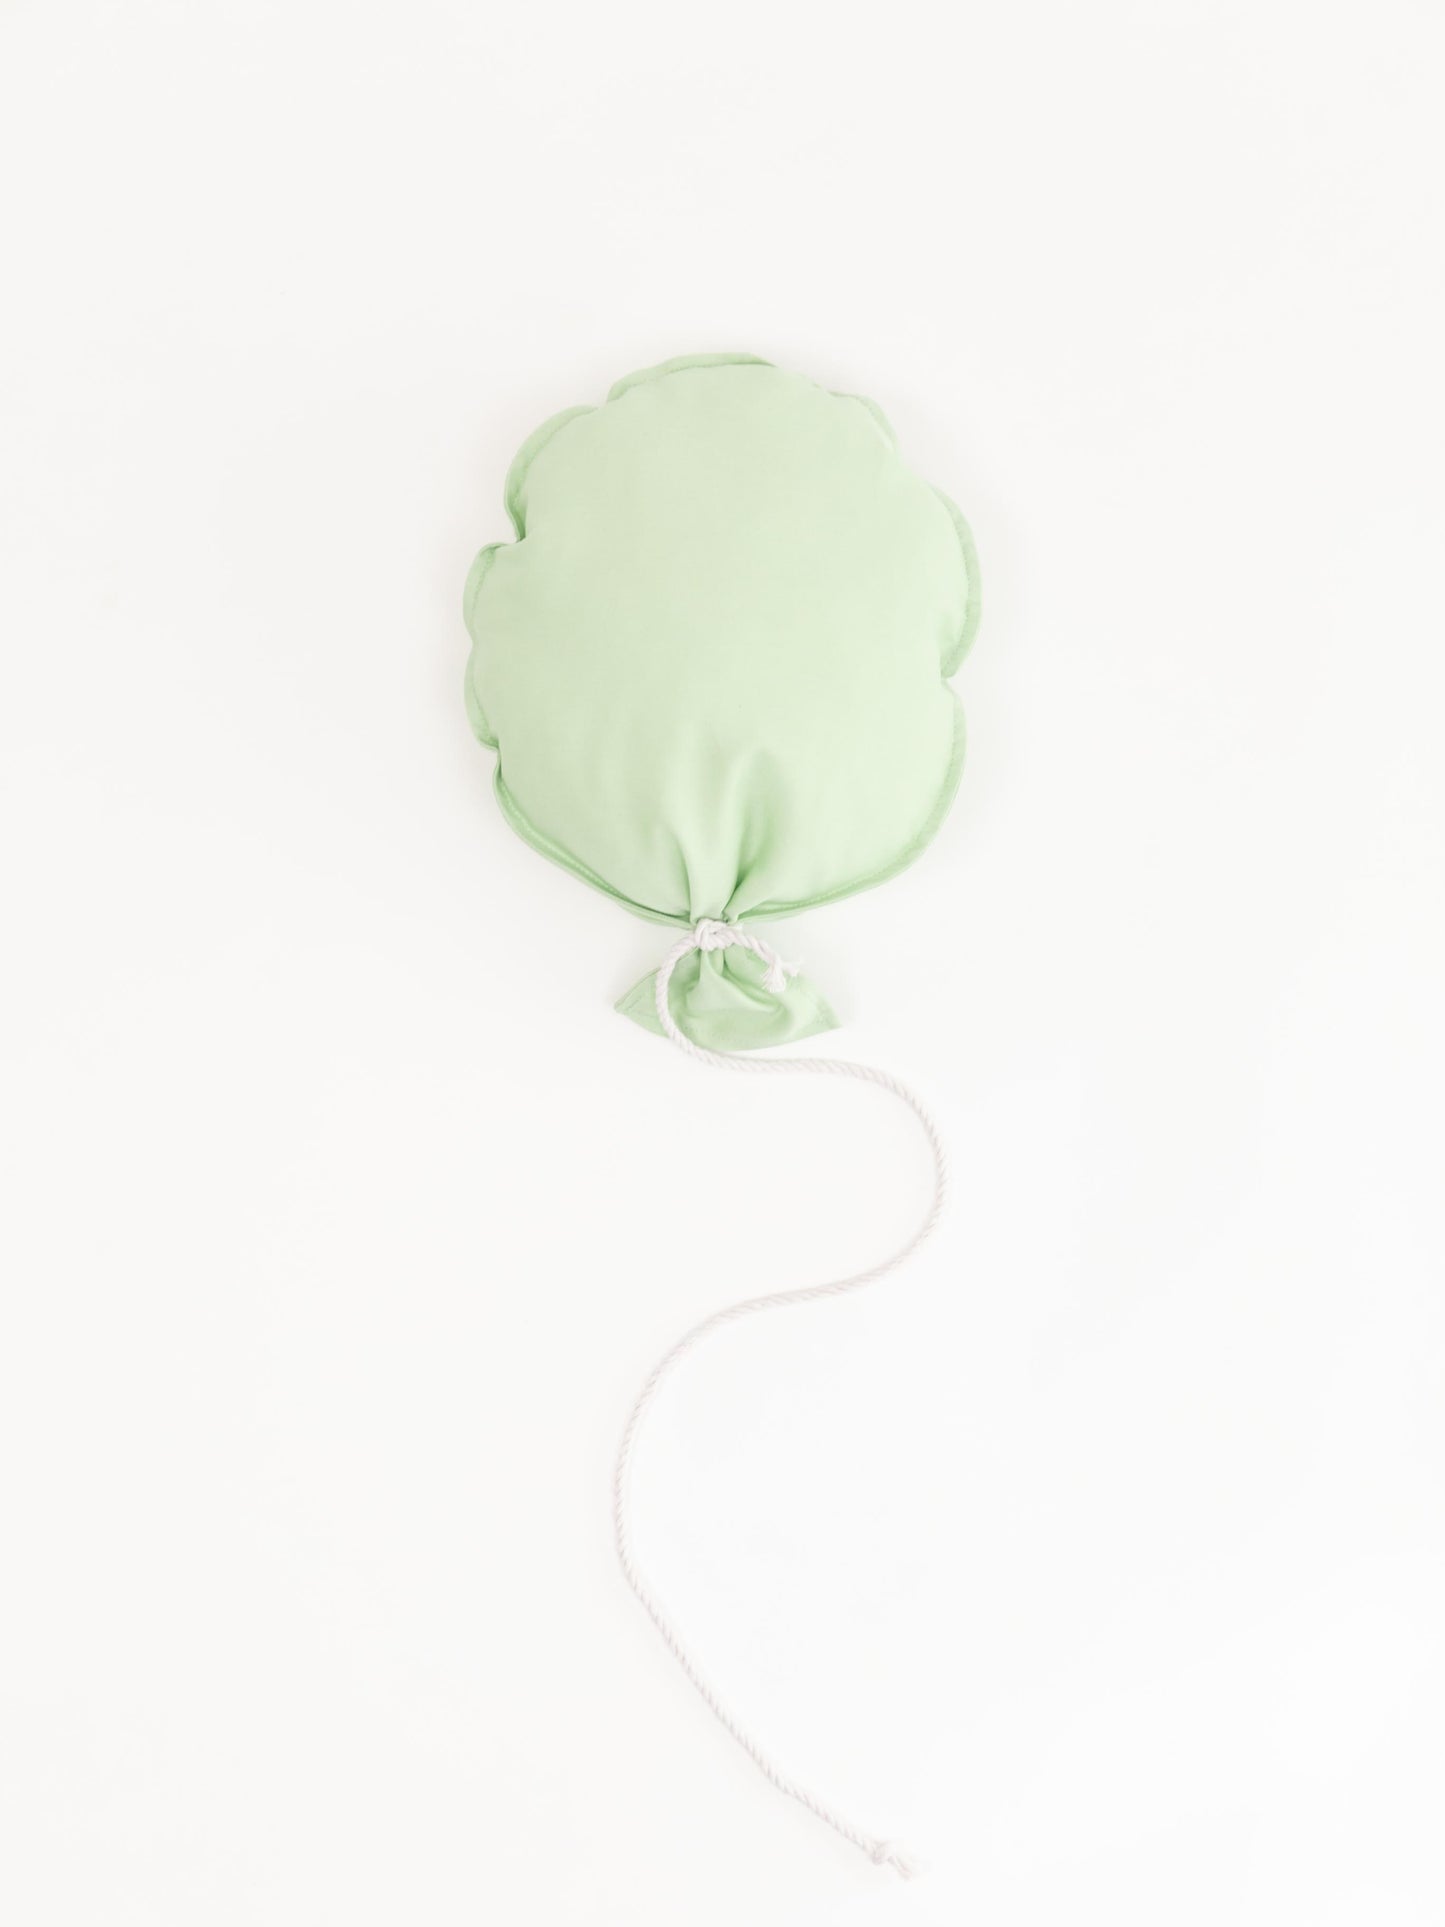 Kinderzimmer Wanddeko 'Stoff-Luftballon' Seafoam handmade